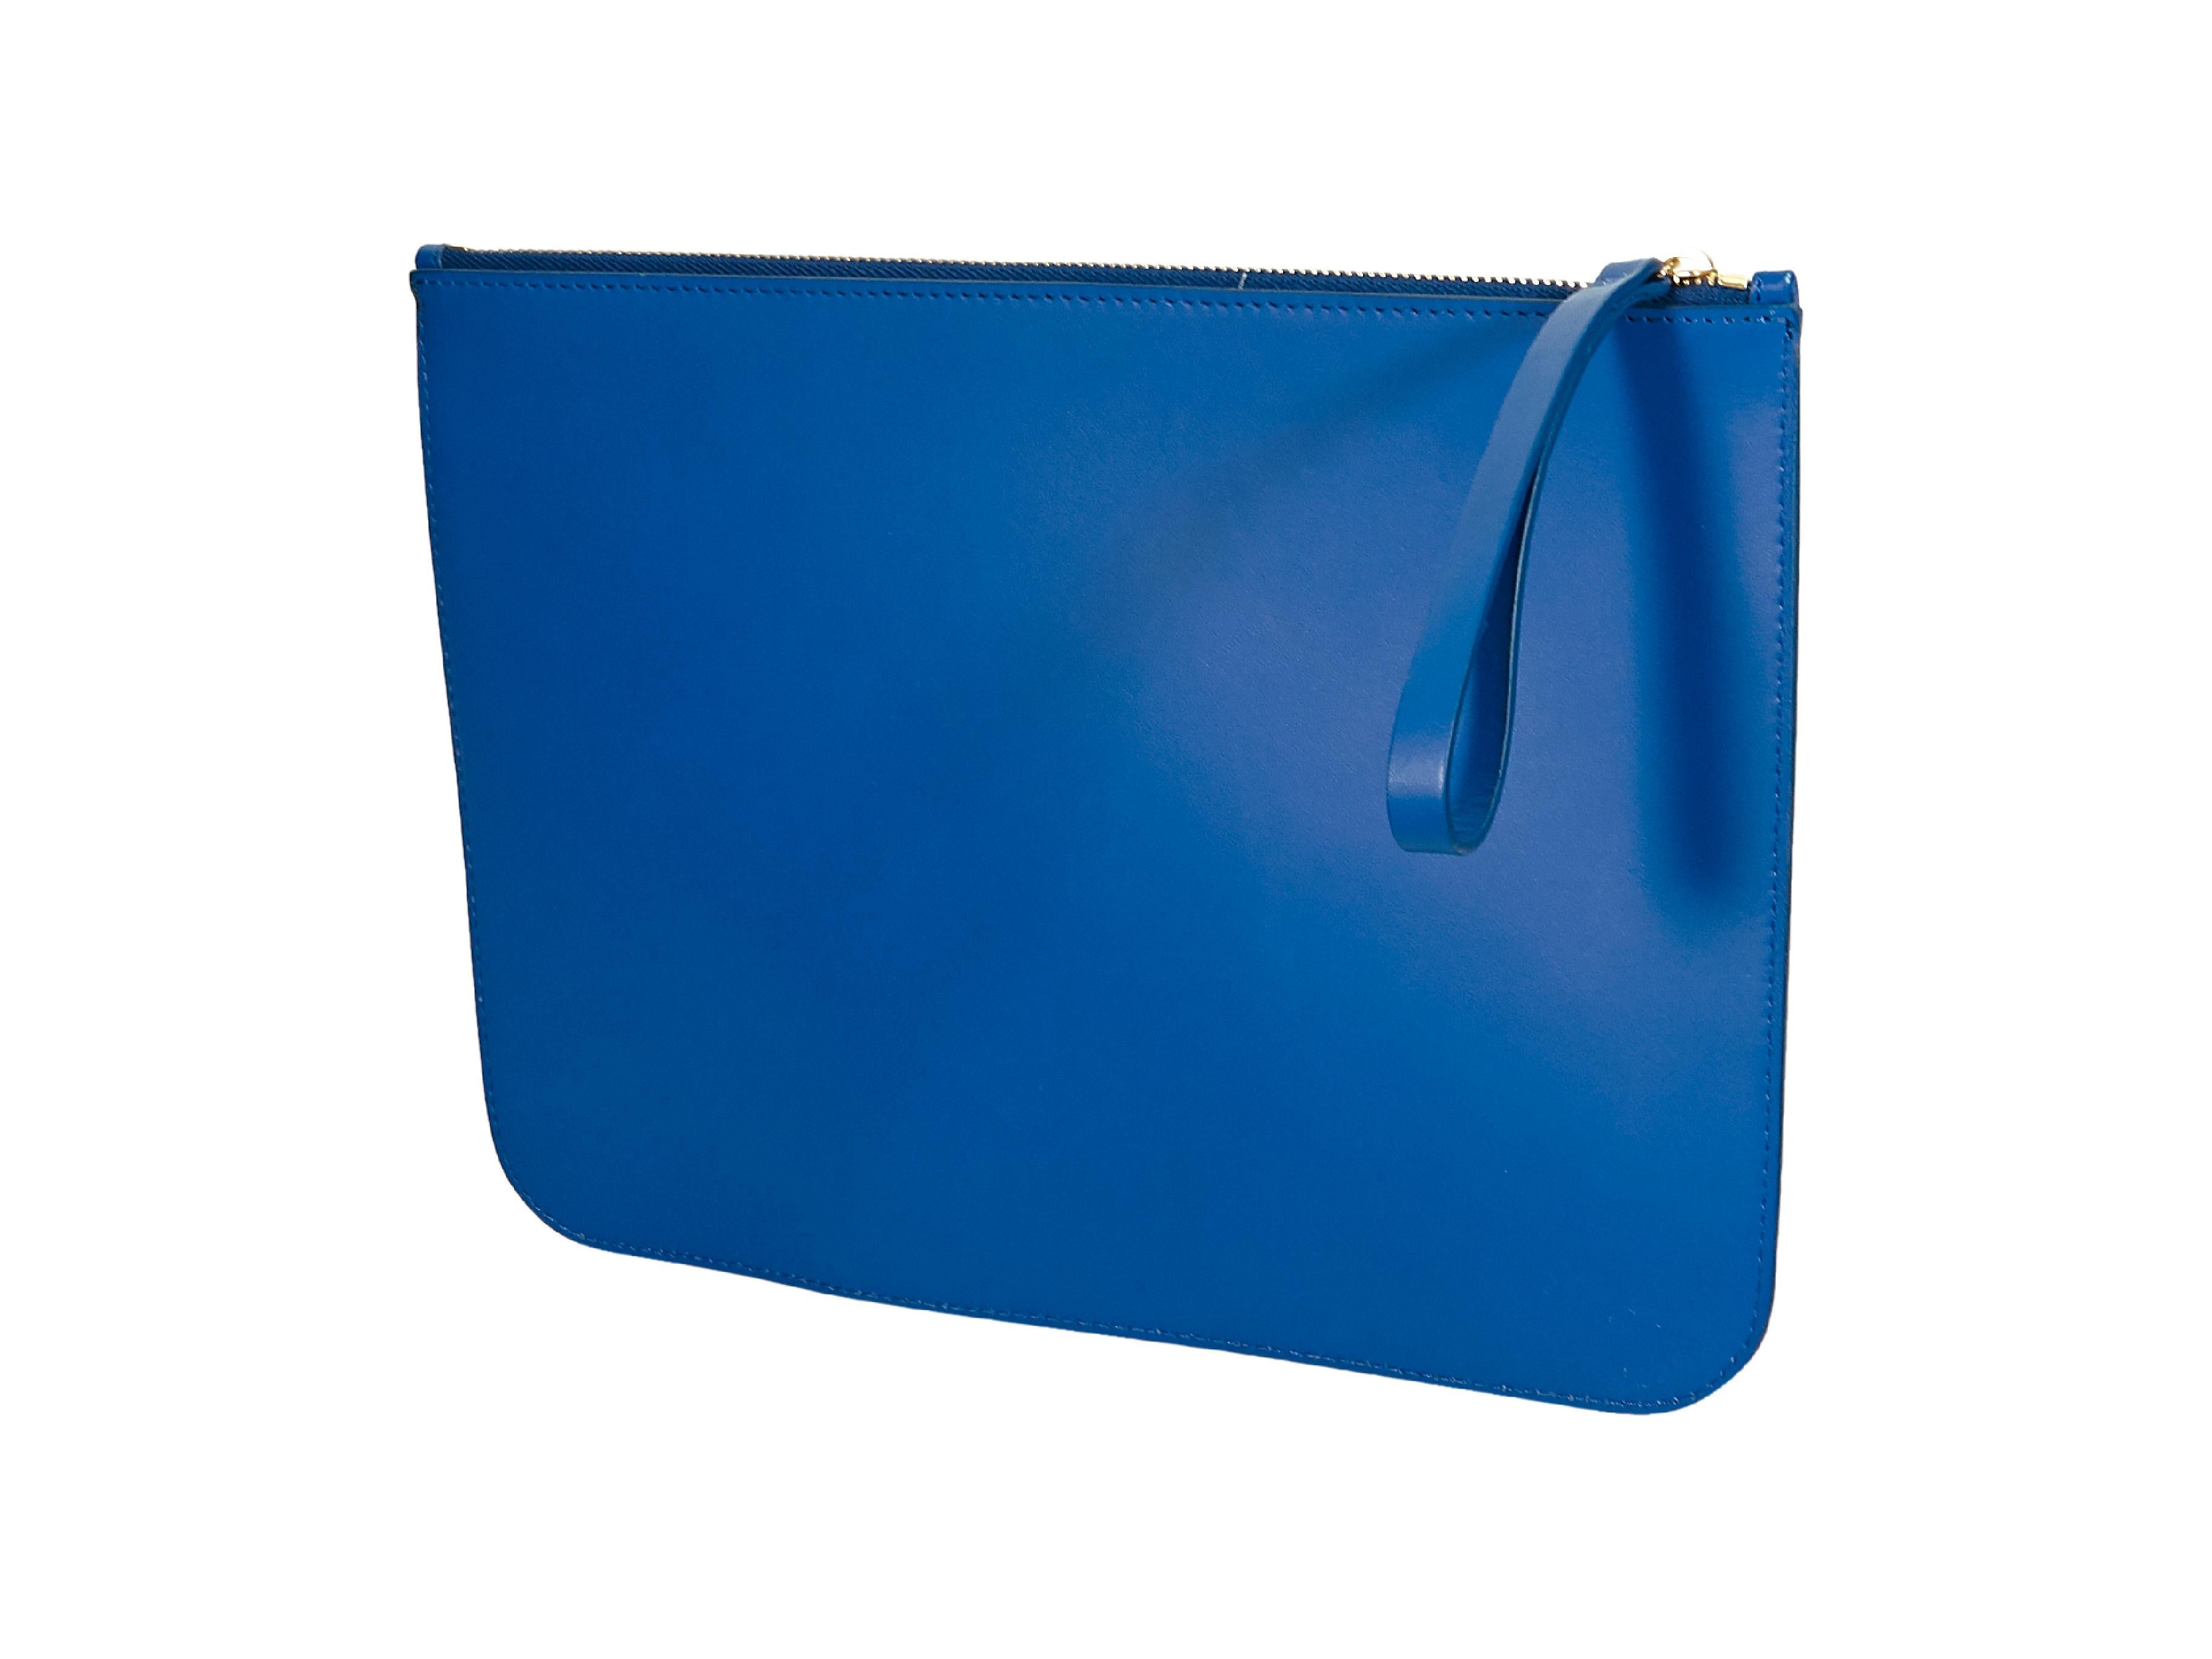 Product details:  Blue leather pouch by Mansur Gavriel.  Top zip closure.  Goldtone hardware.  11.5